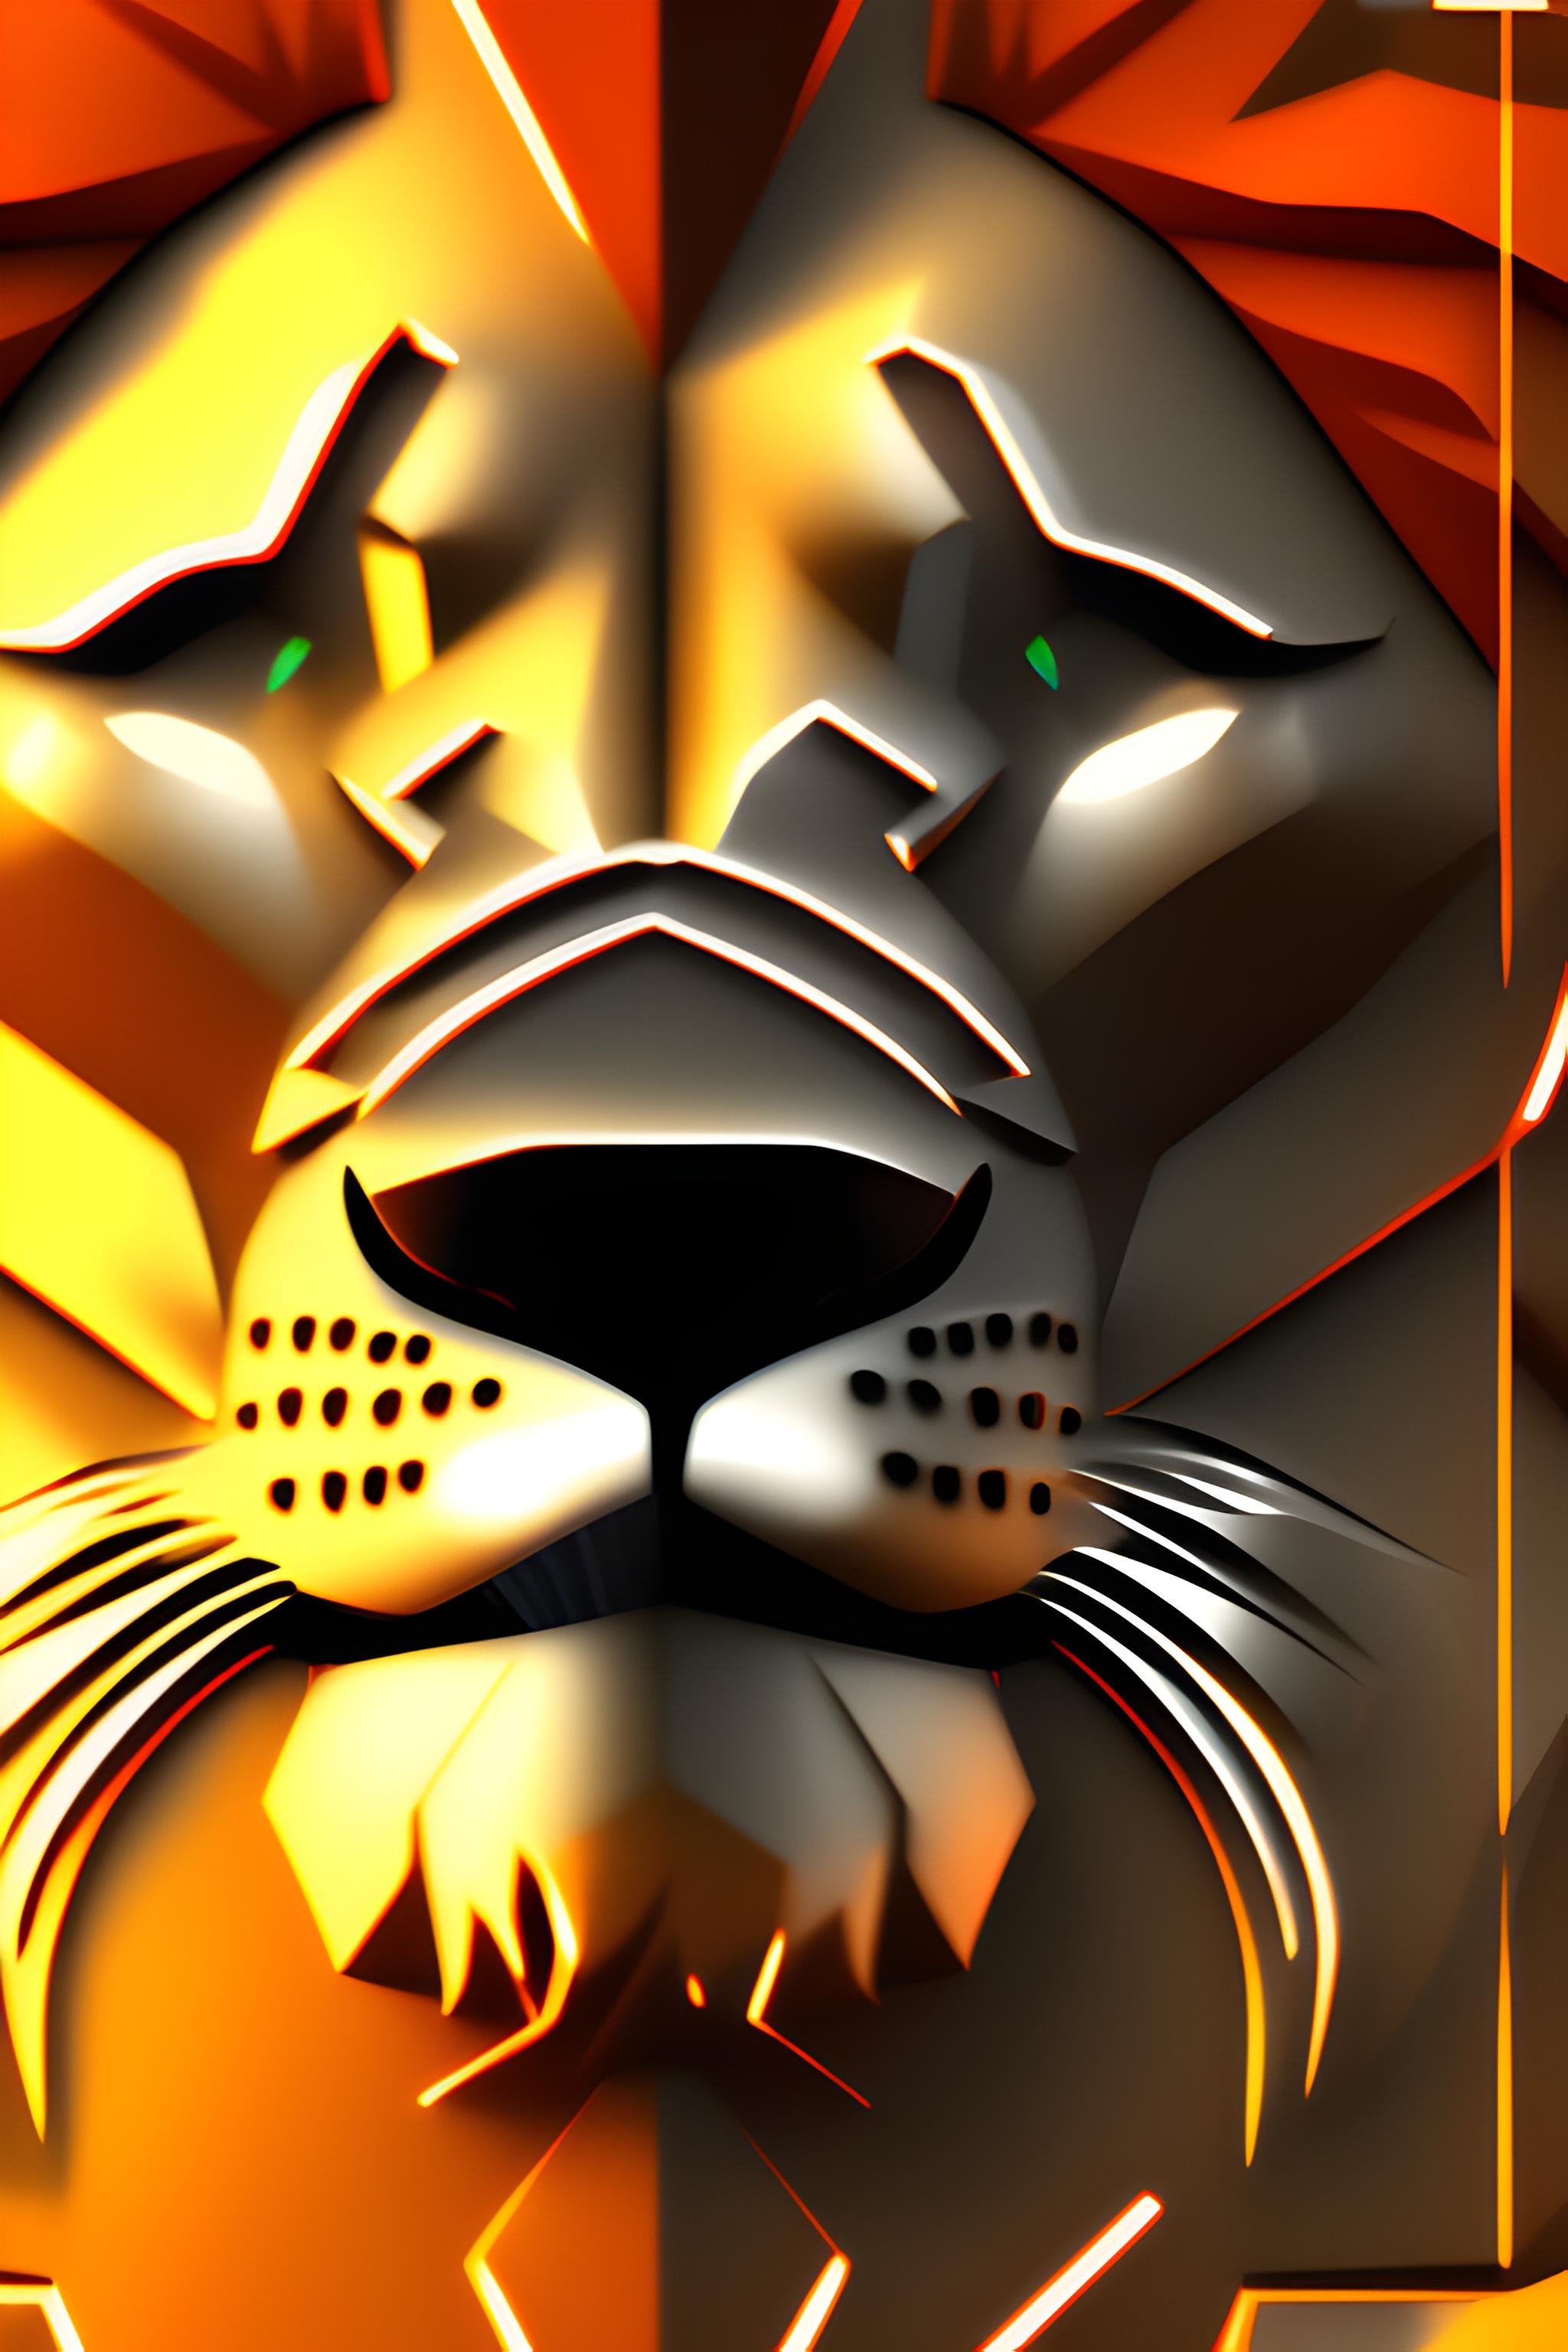 Lion head gaming logo Royalty Free Vector Image